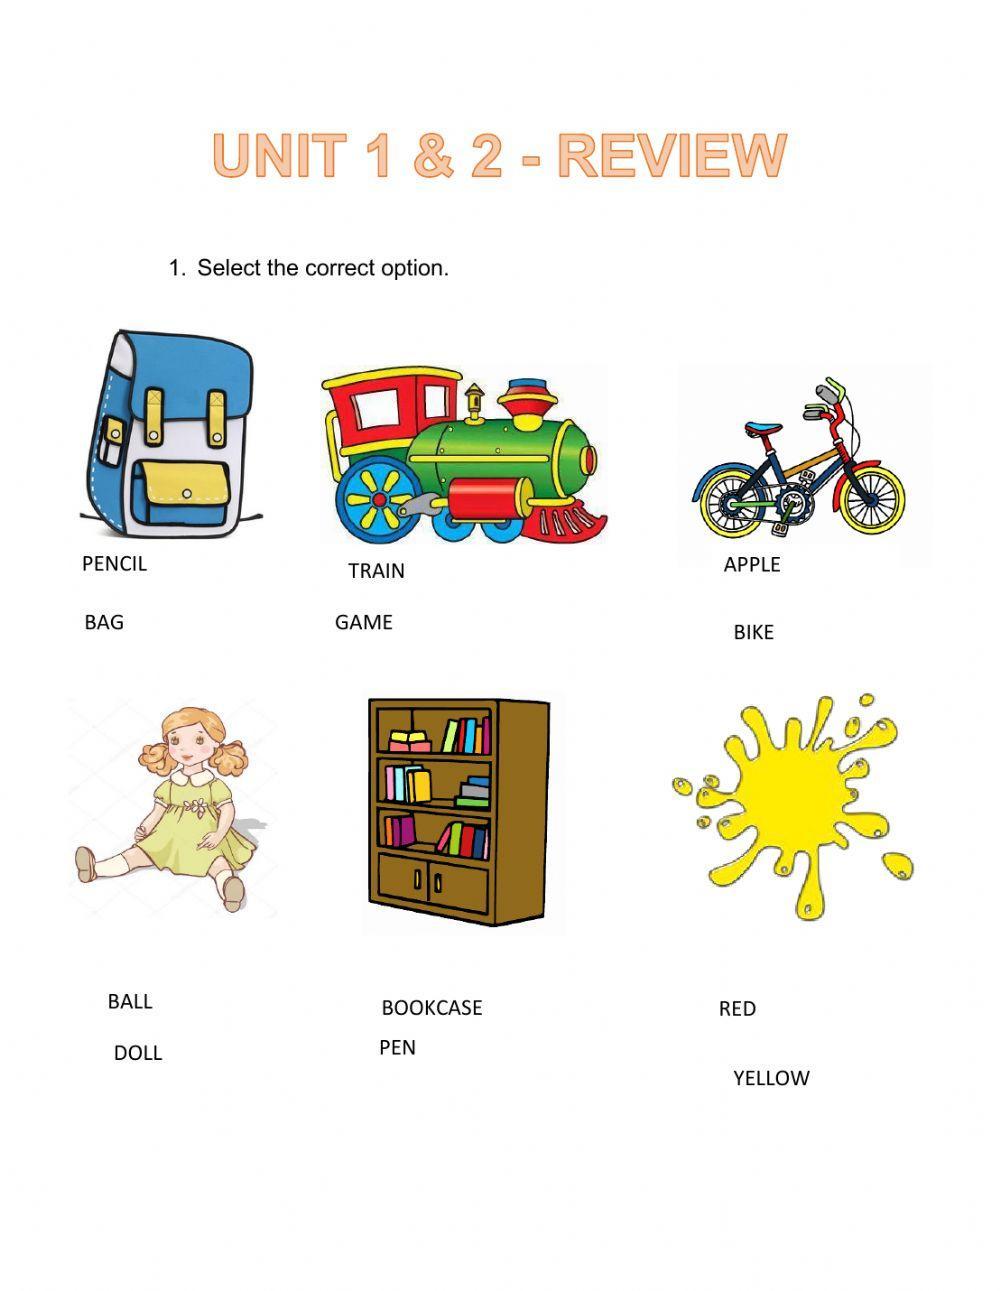 Review units 1&2